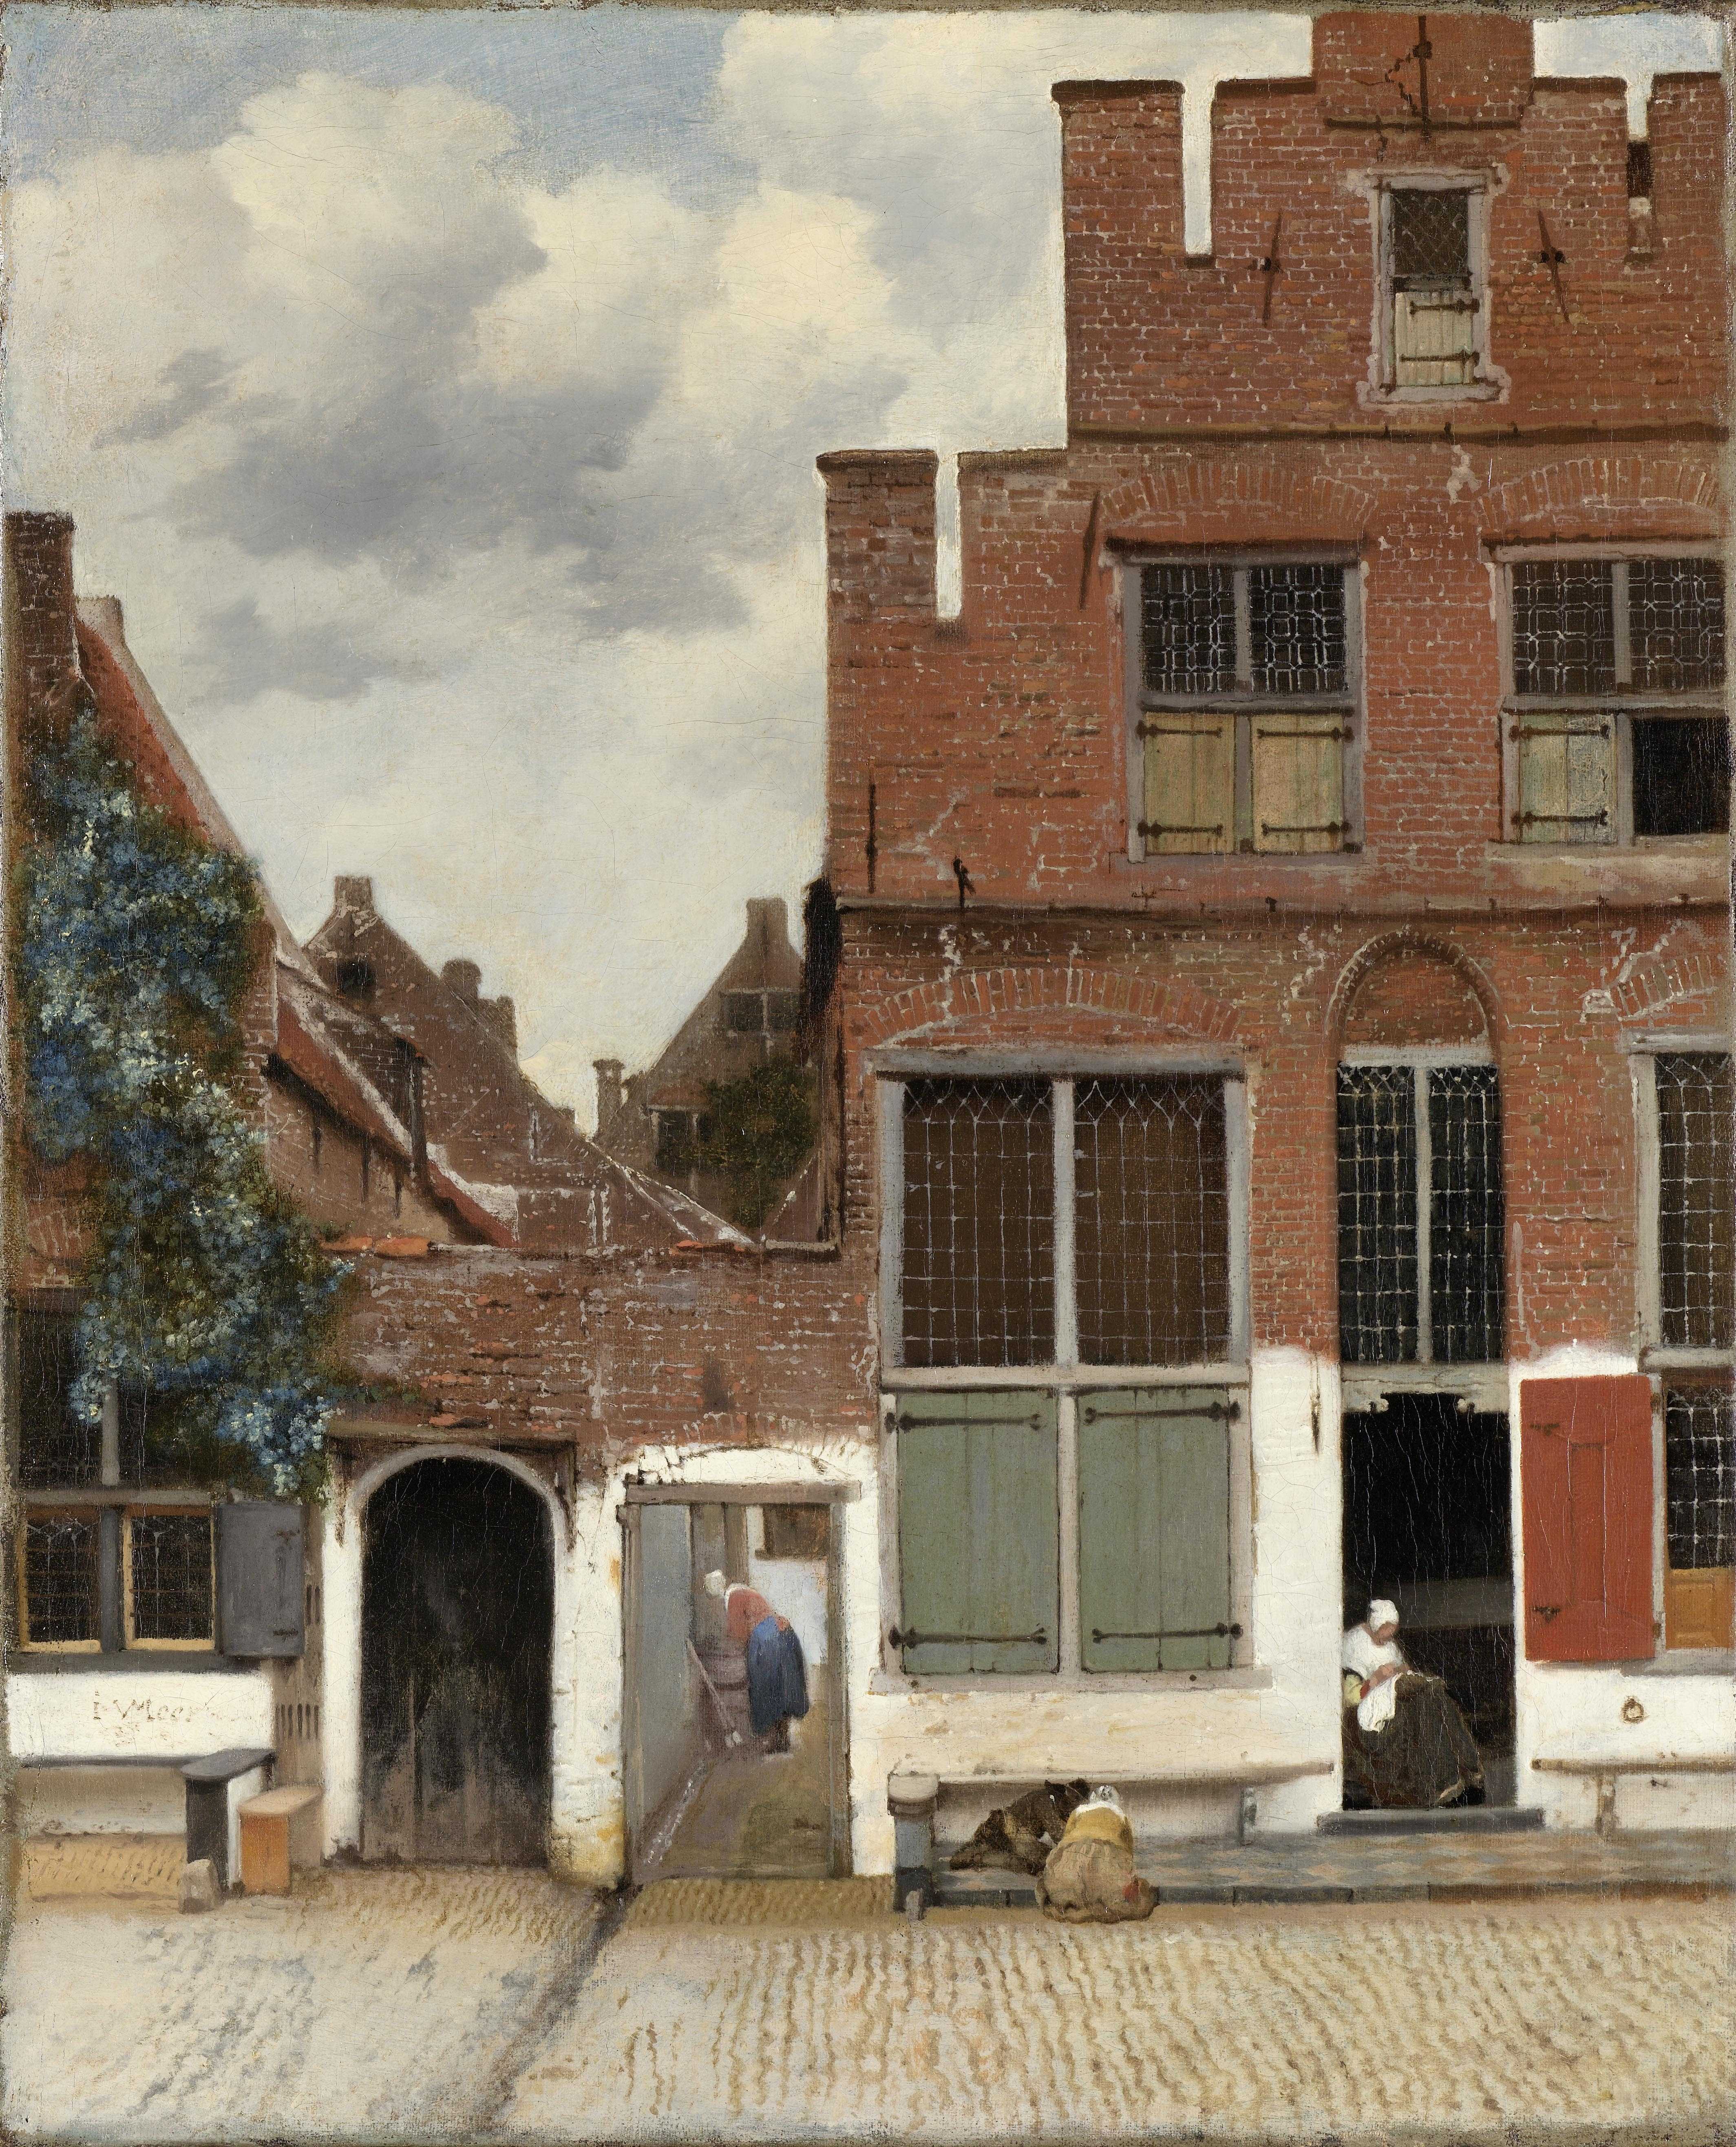  View of houses in Delft Vermeer c. 1658 Amsterdam, Rijksmuseum. Gift of H.W.A. Deterding, London